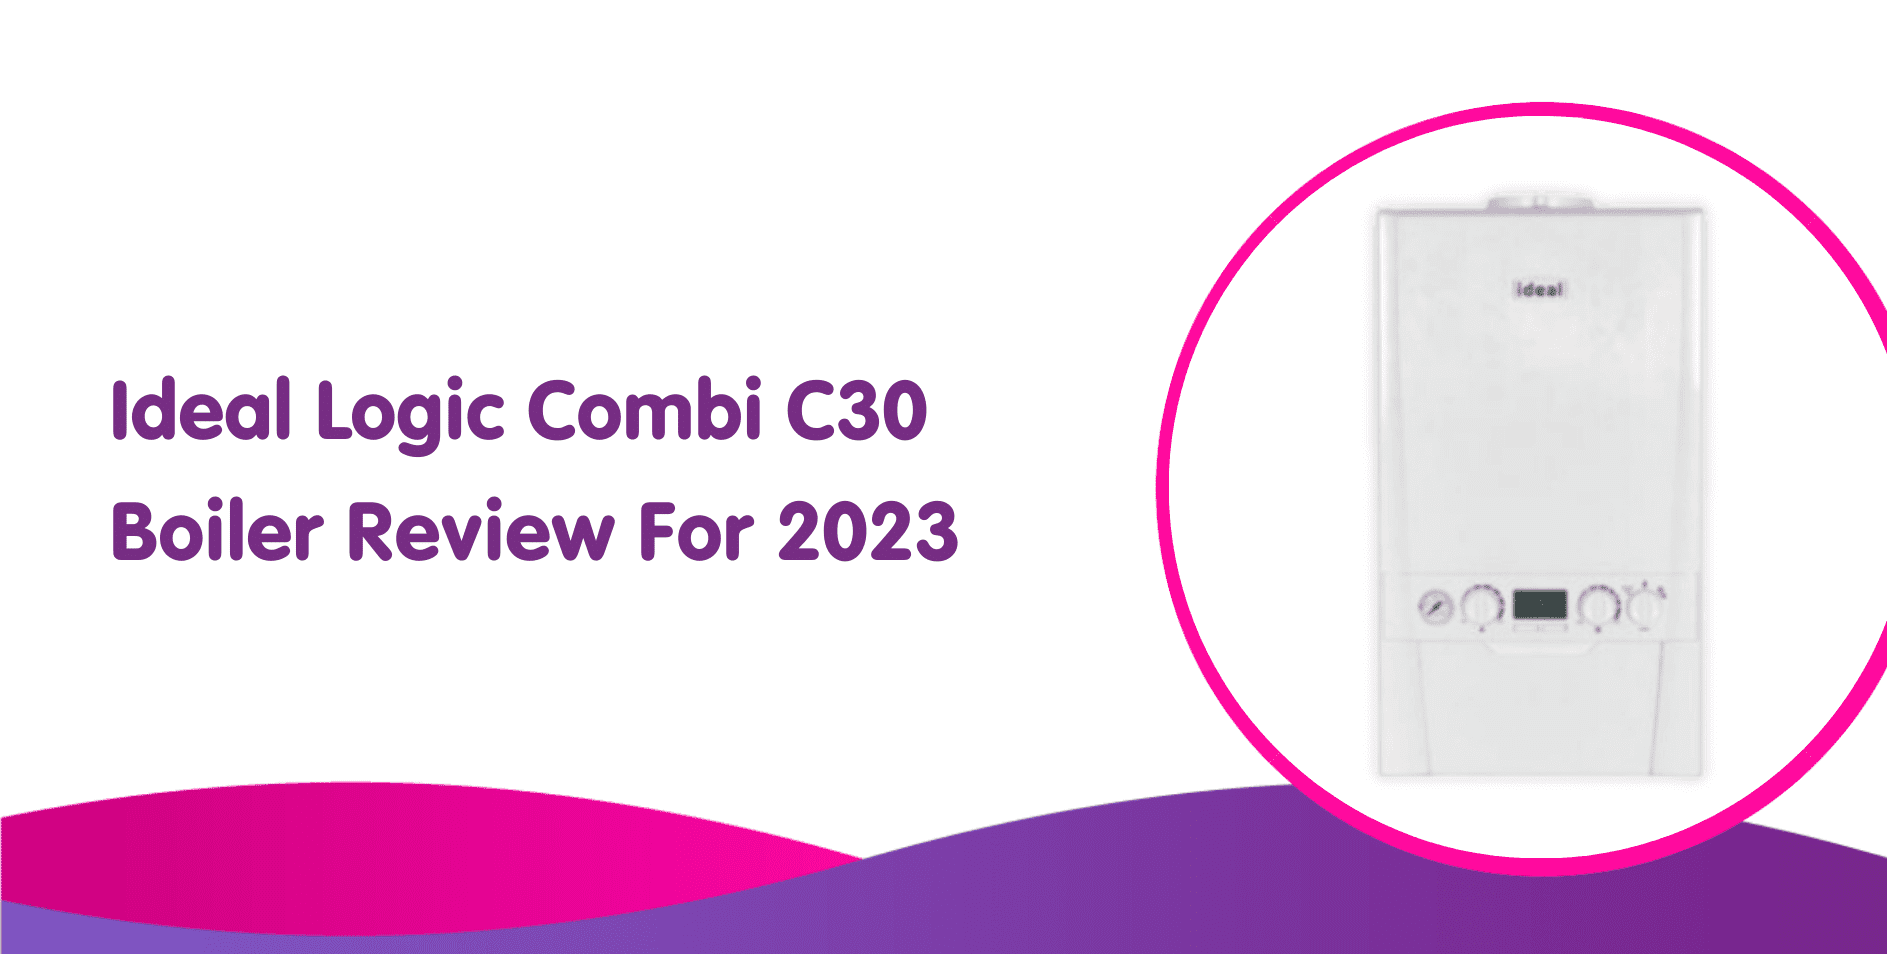 Ideal Logic Combi C30 Boiler Review For 2023